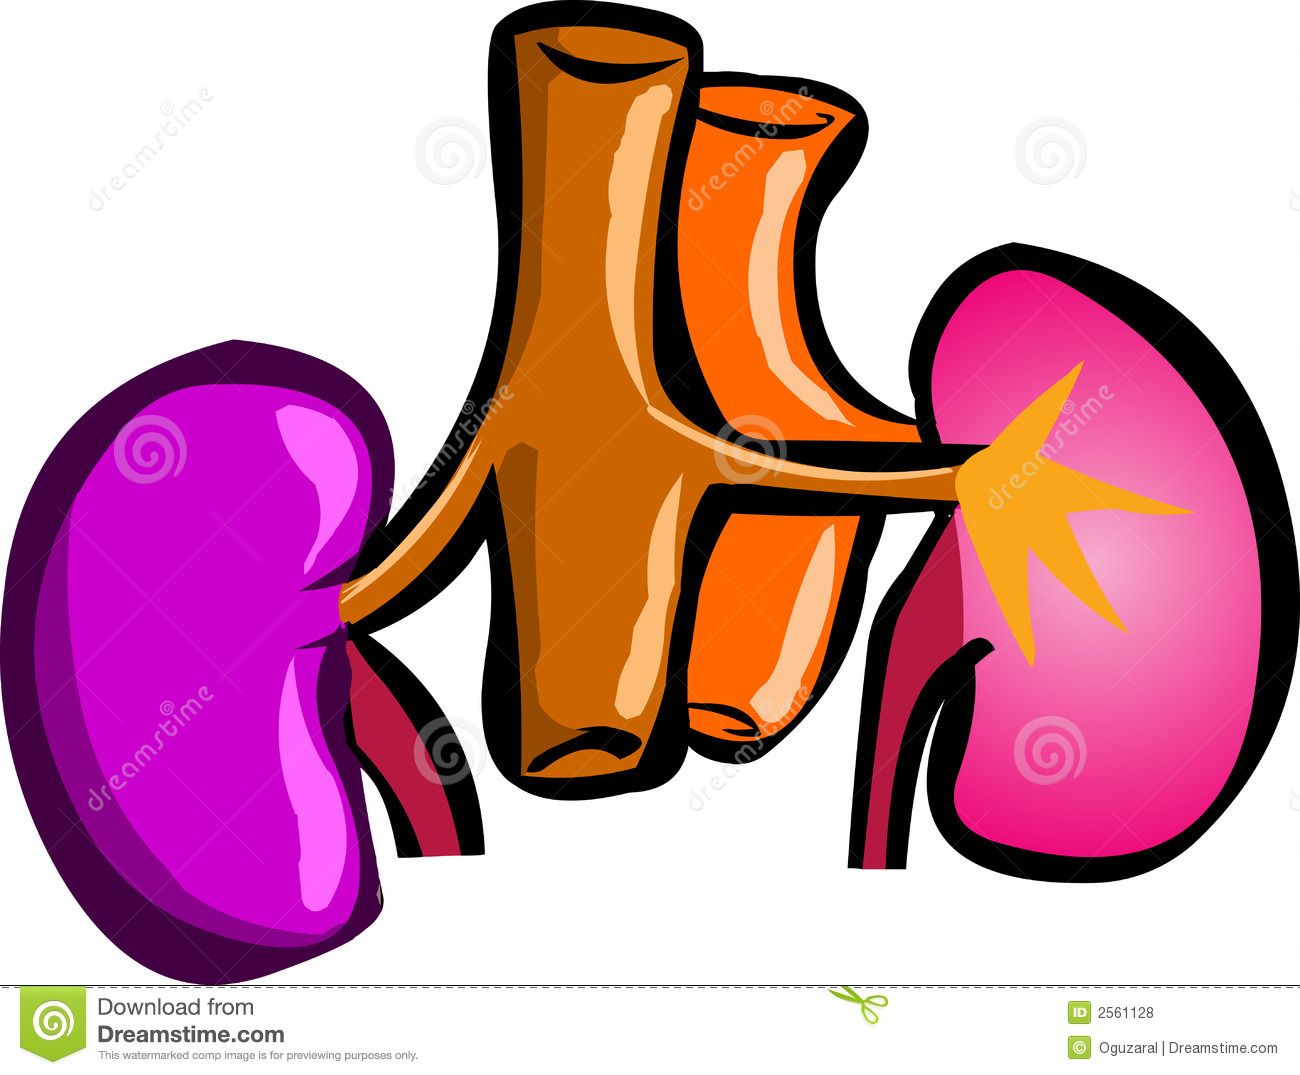 Kidney Picture Clip Art.